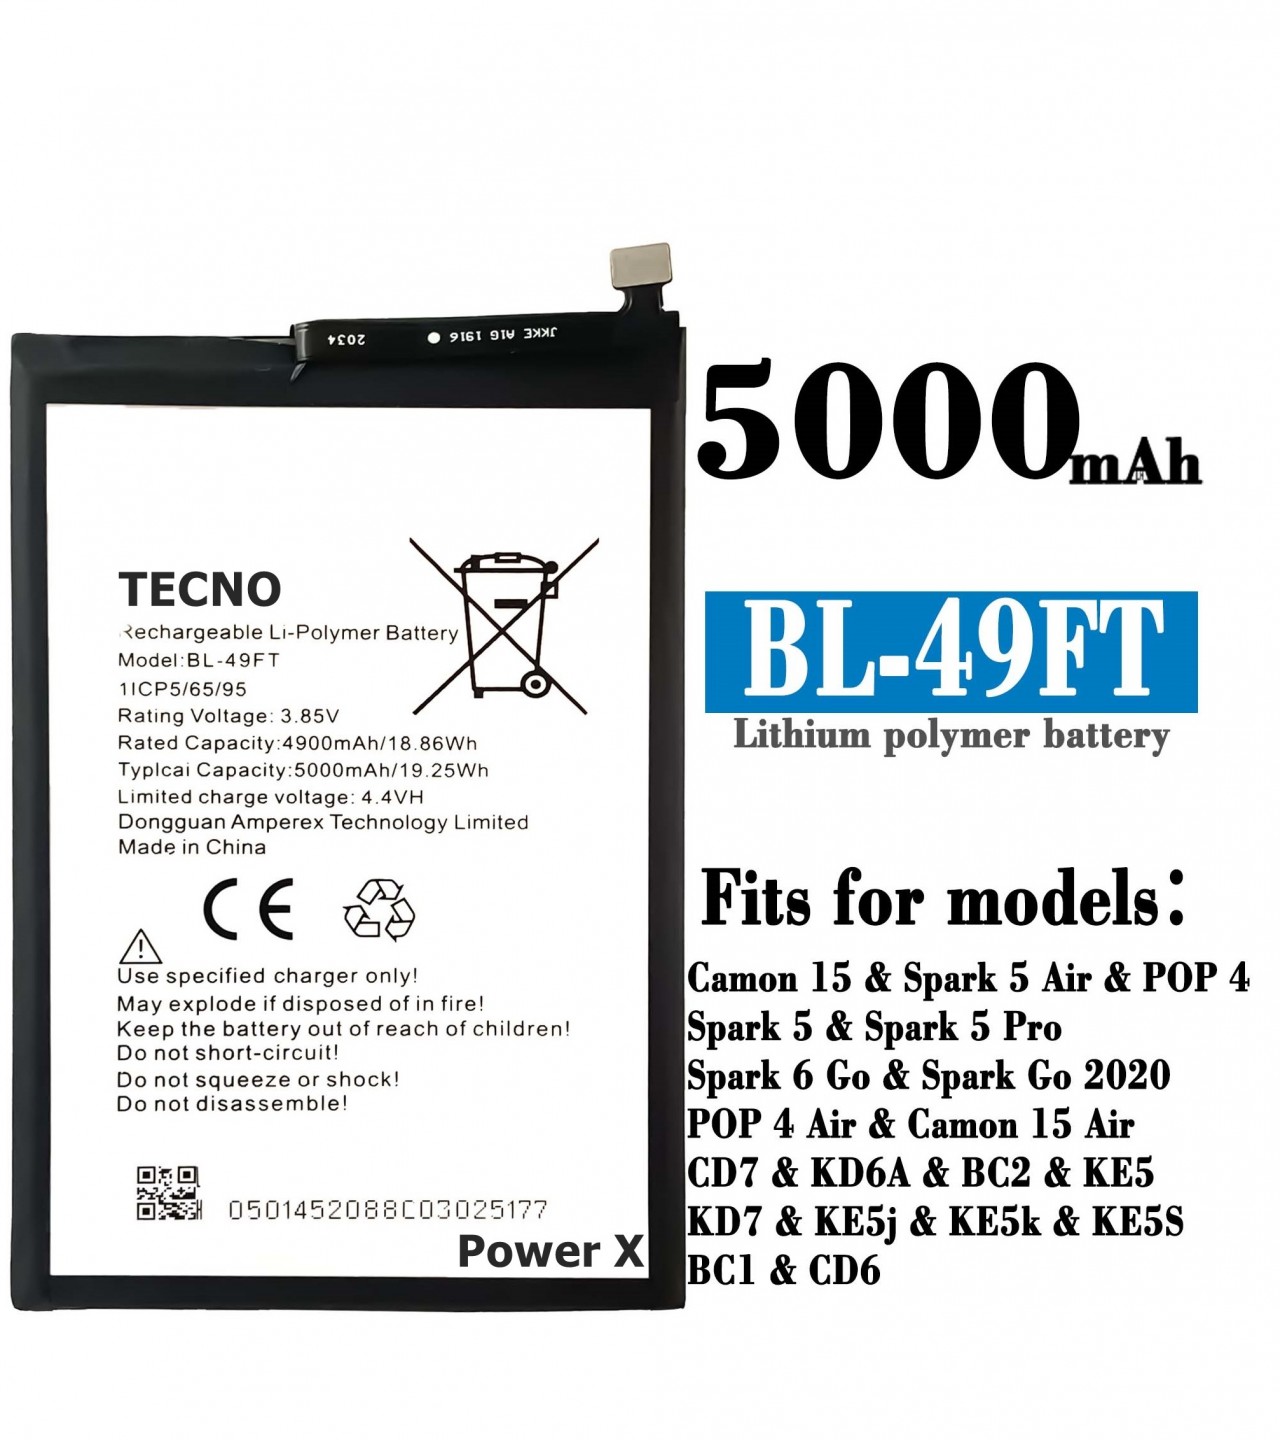 TECNO Spark 6 Go BL-49FT Battery with 5000mAh Capacity_Silver